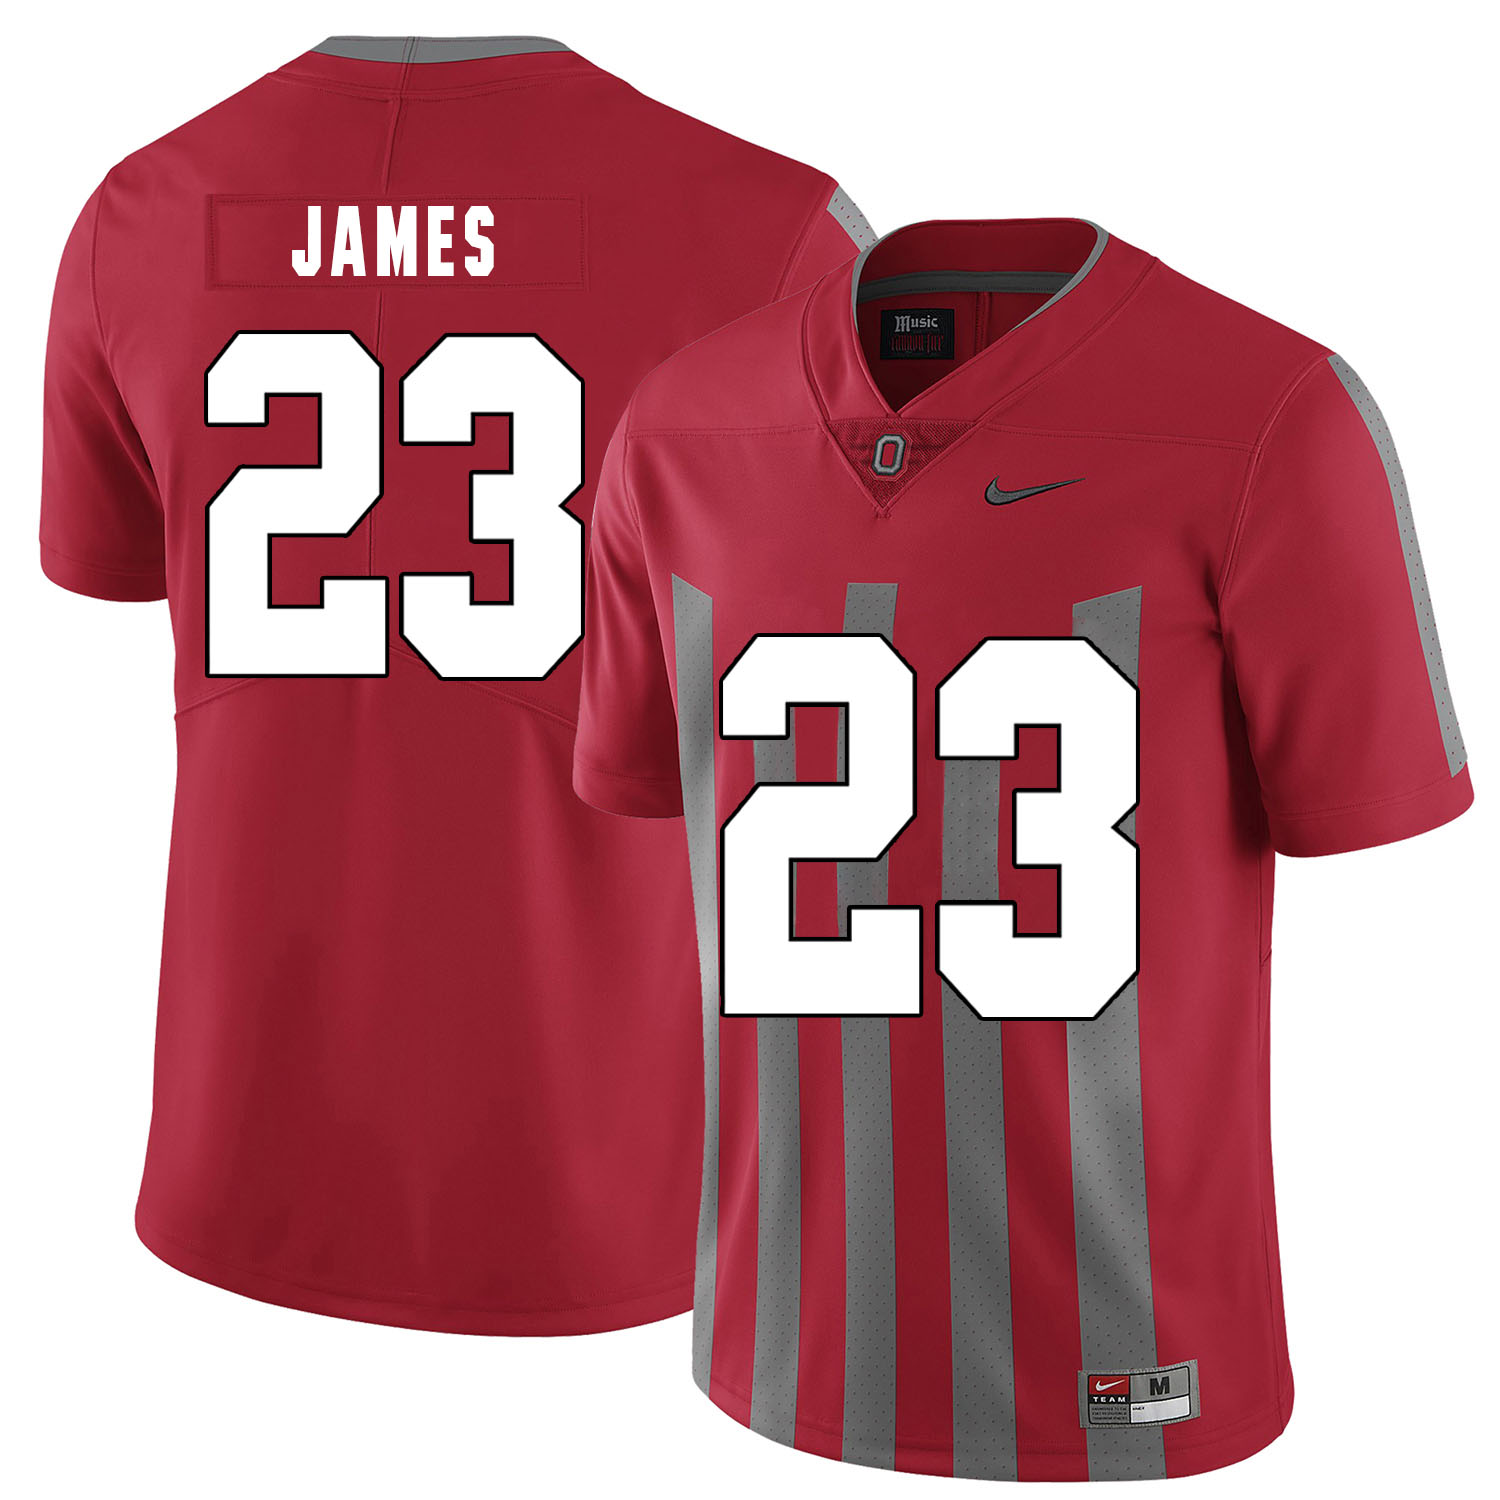 Ohio State Buckeyes 23 Lebron James Red Elite Nike College Football Jersey